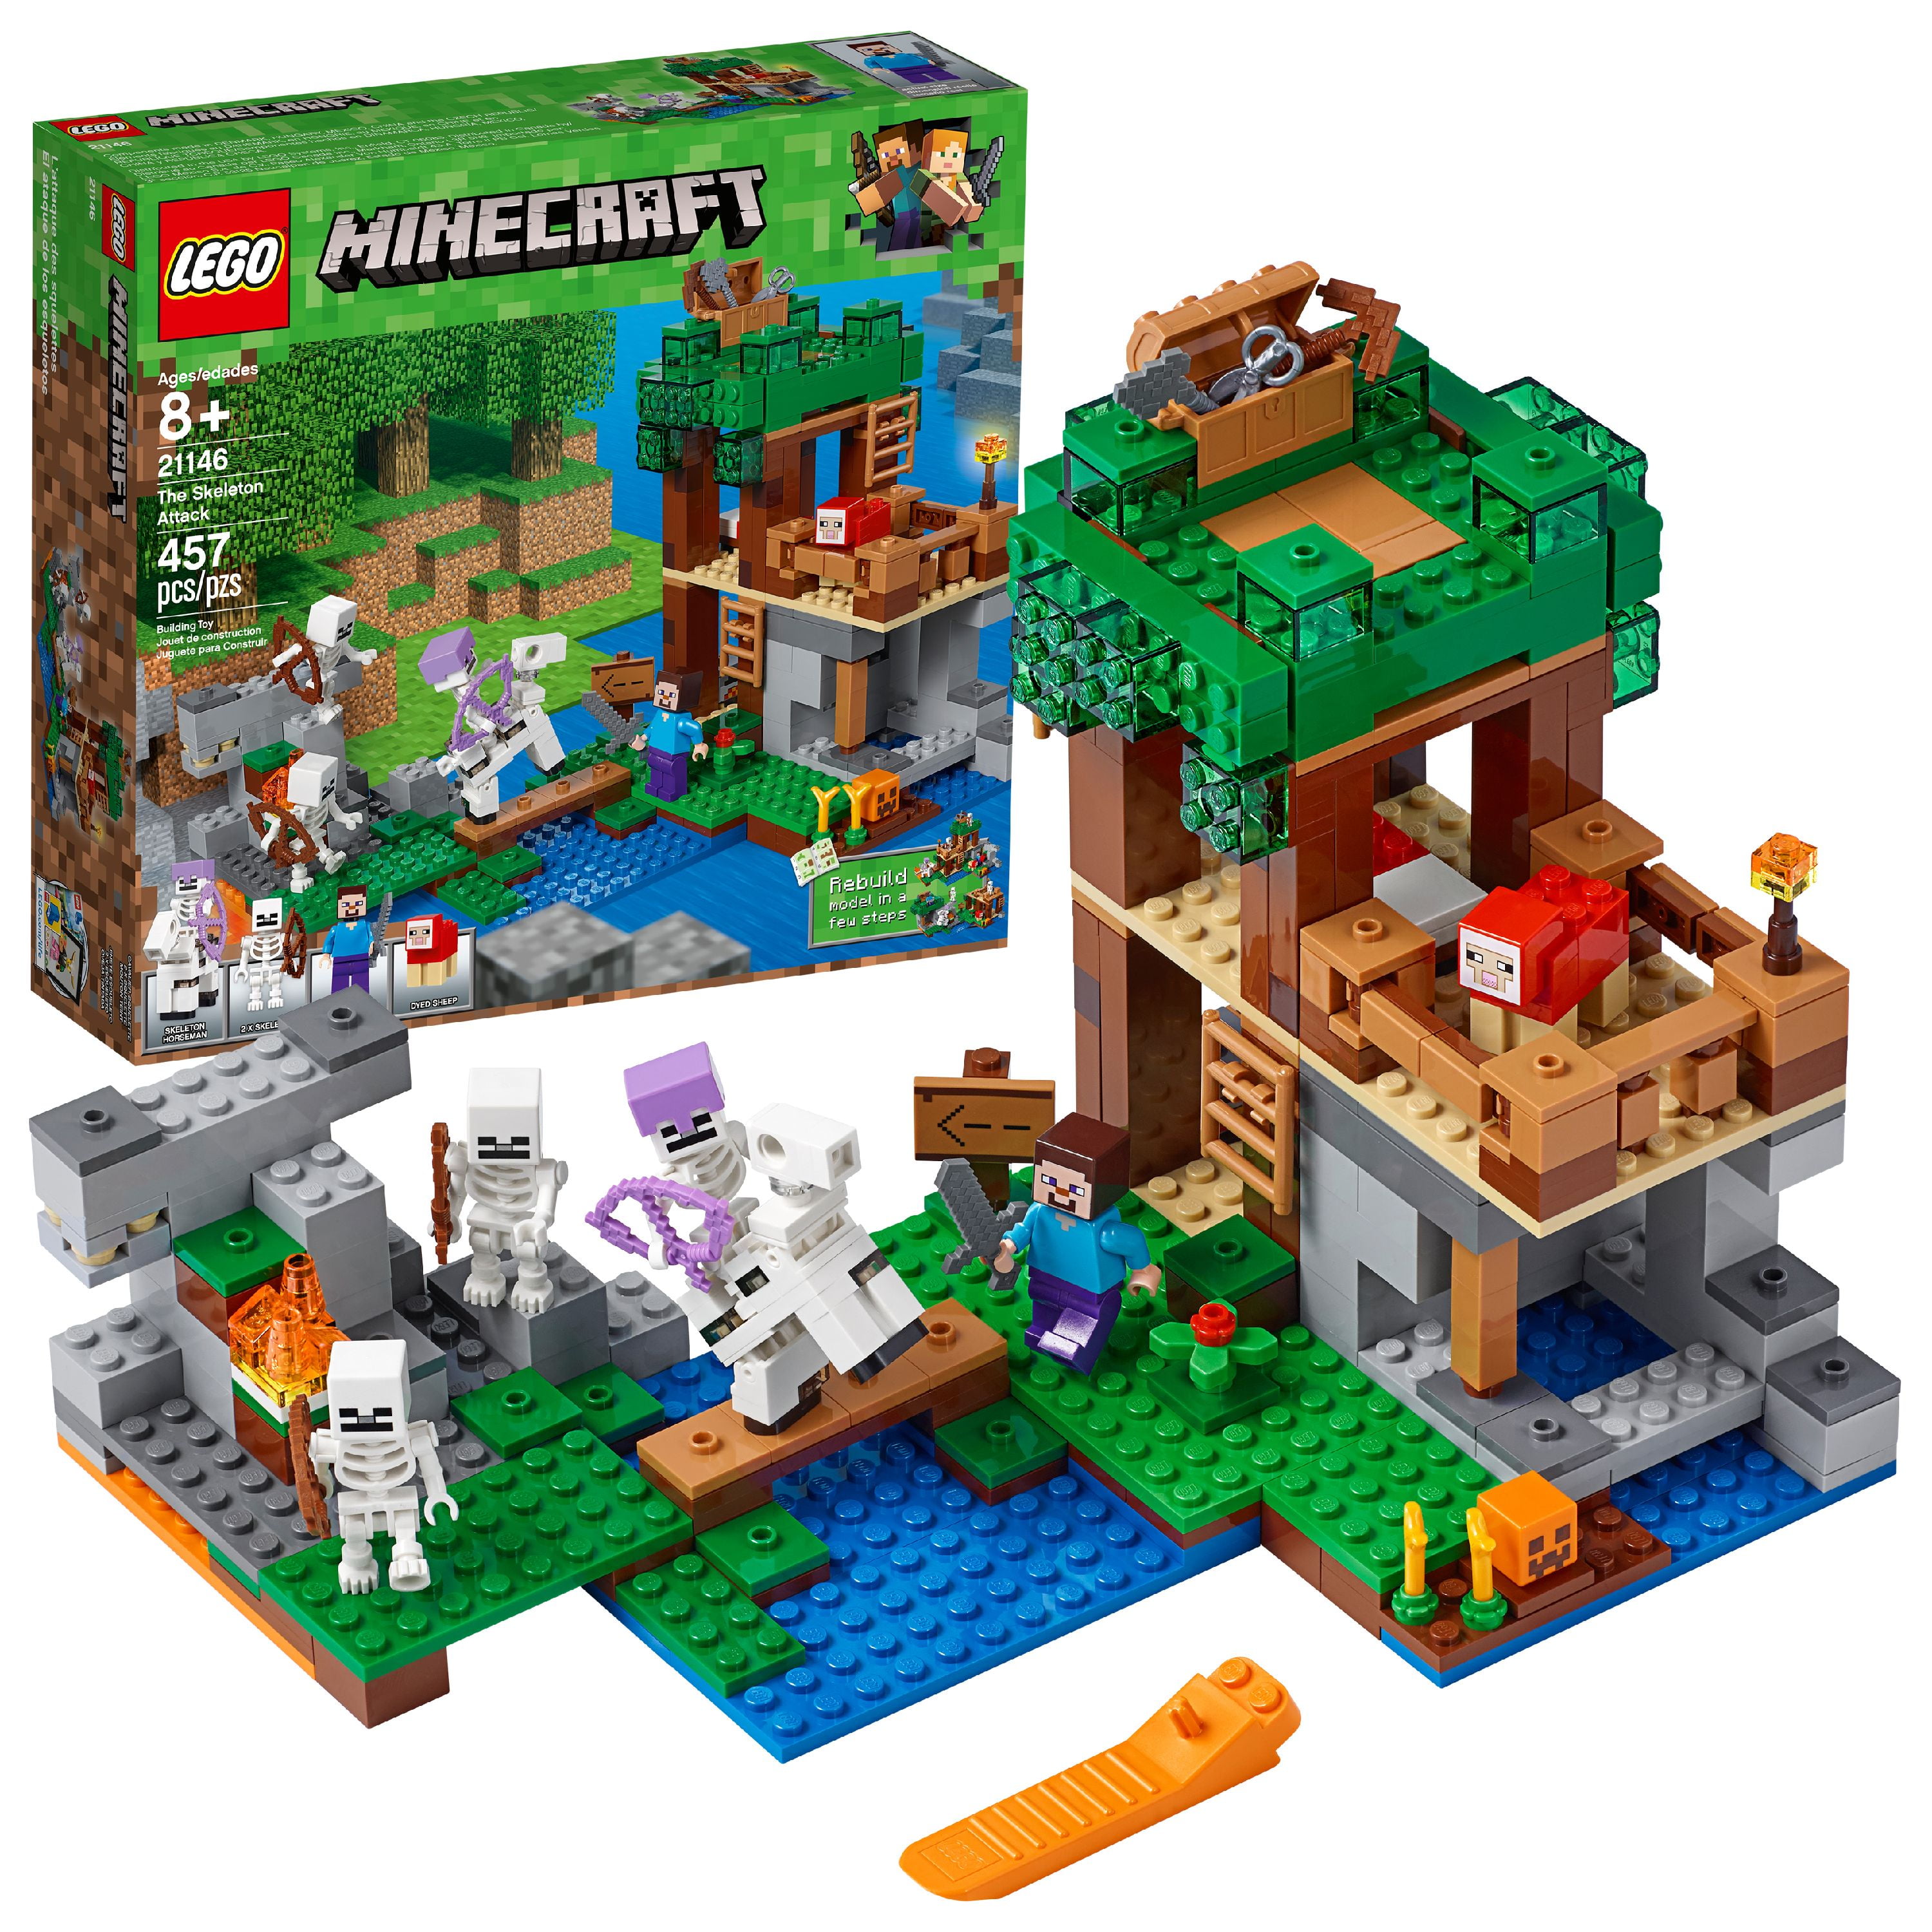 LEGO Minecraft The Crafting Box 2.0 21135 (717 Pieces) - Walmart.com